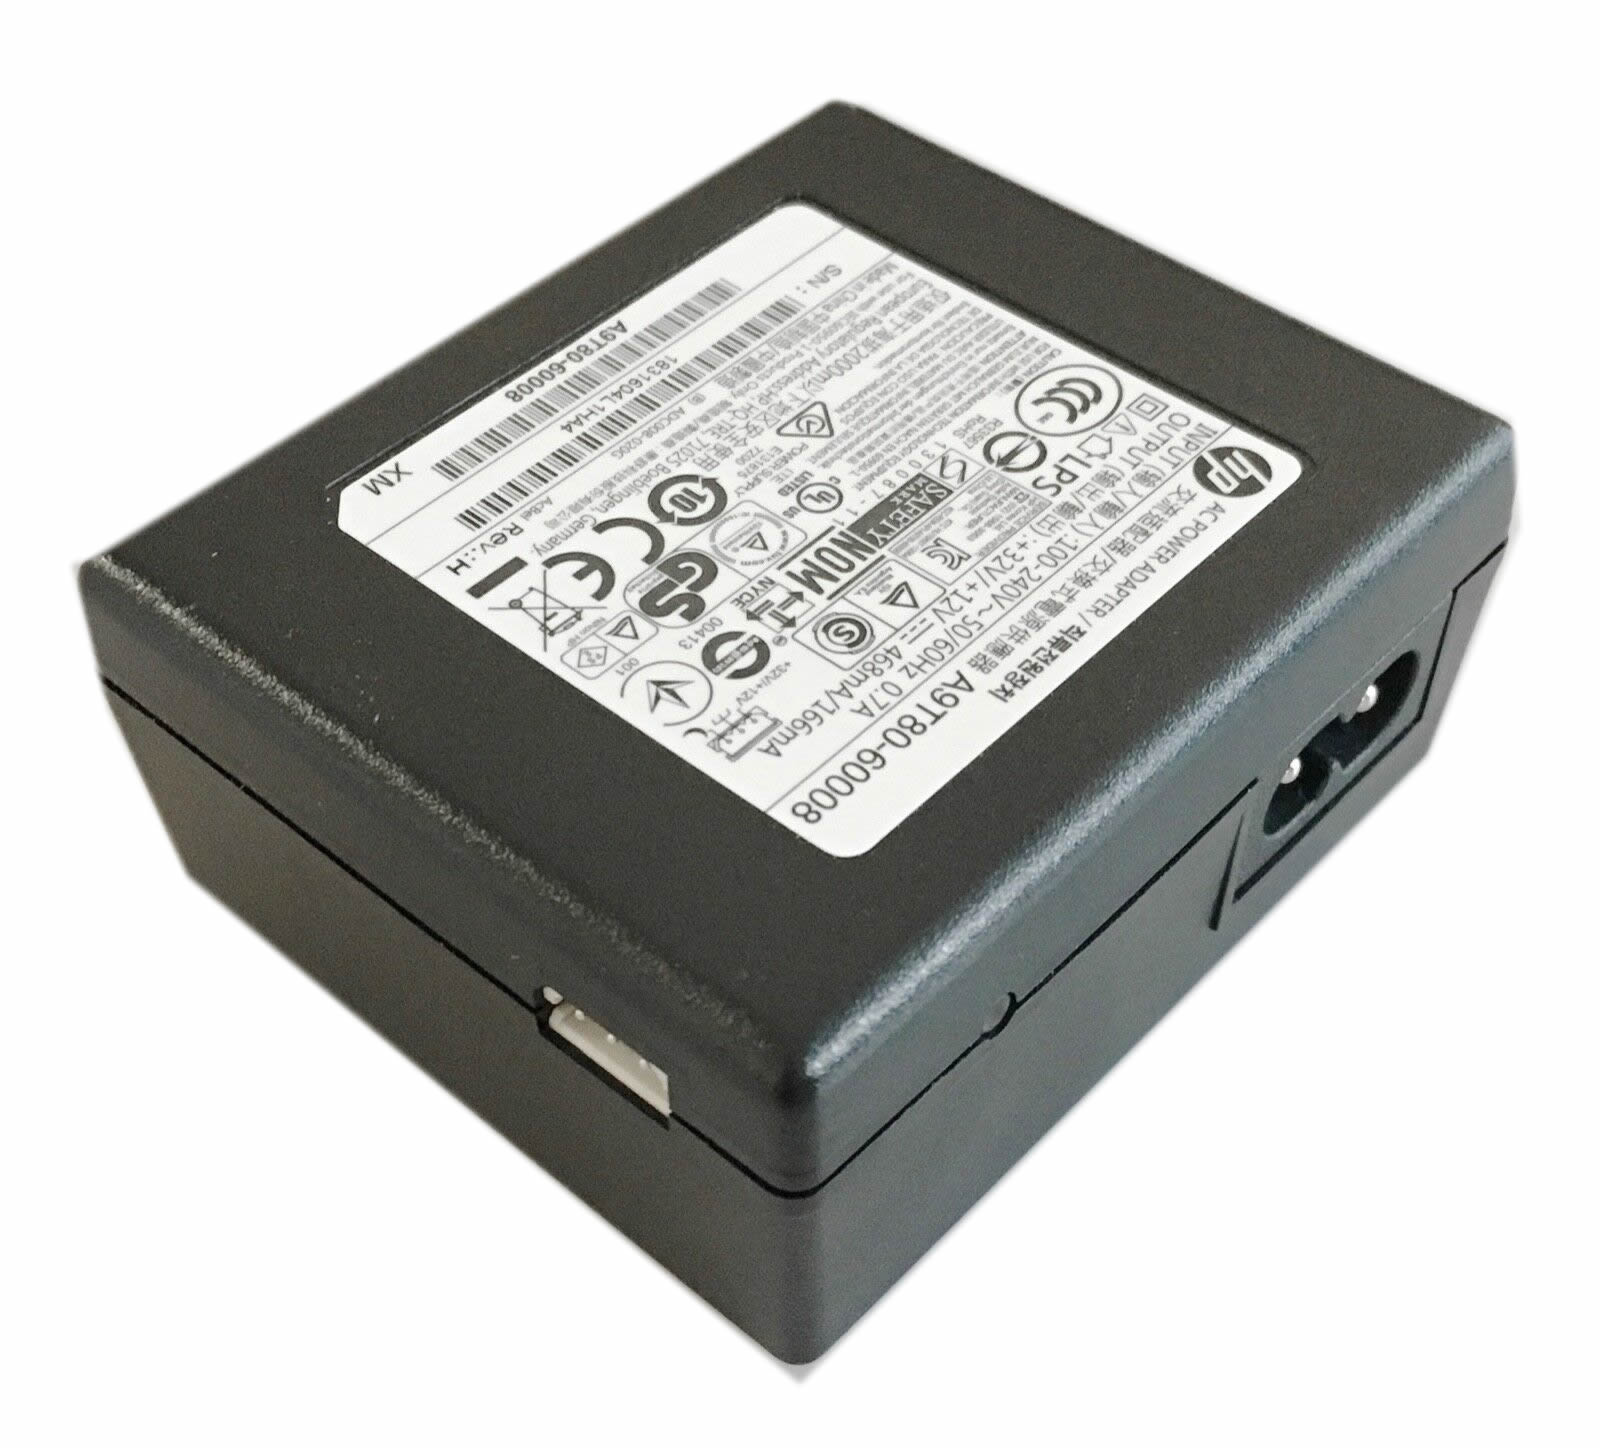 HP A9T80-60008 adaptateur chargeur 32V 0.468A 15W alimentation originale pour HP ENVY 4500 e-All-in-One séries